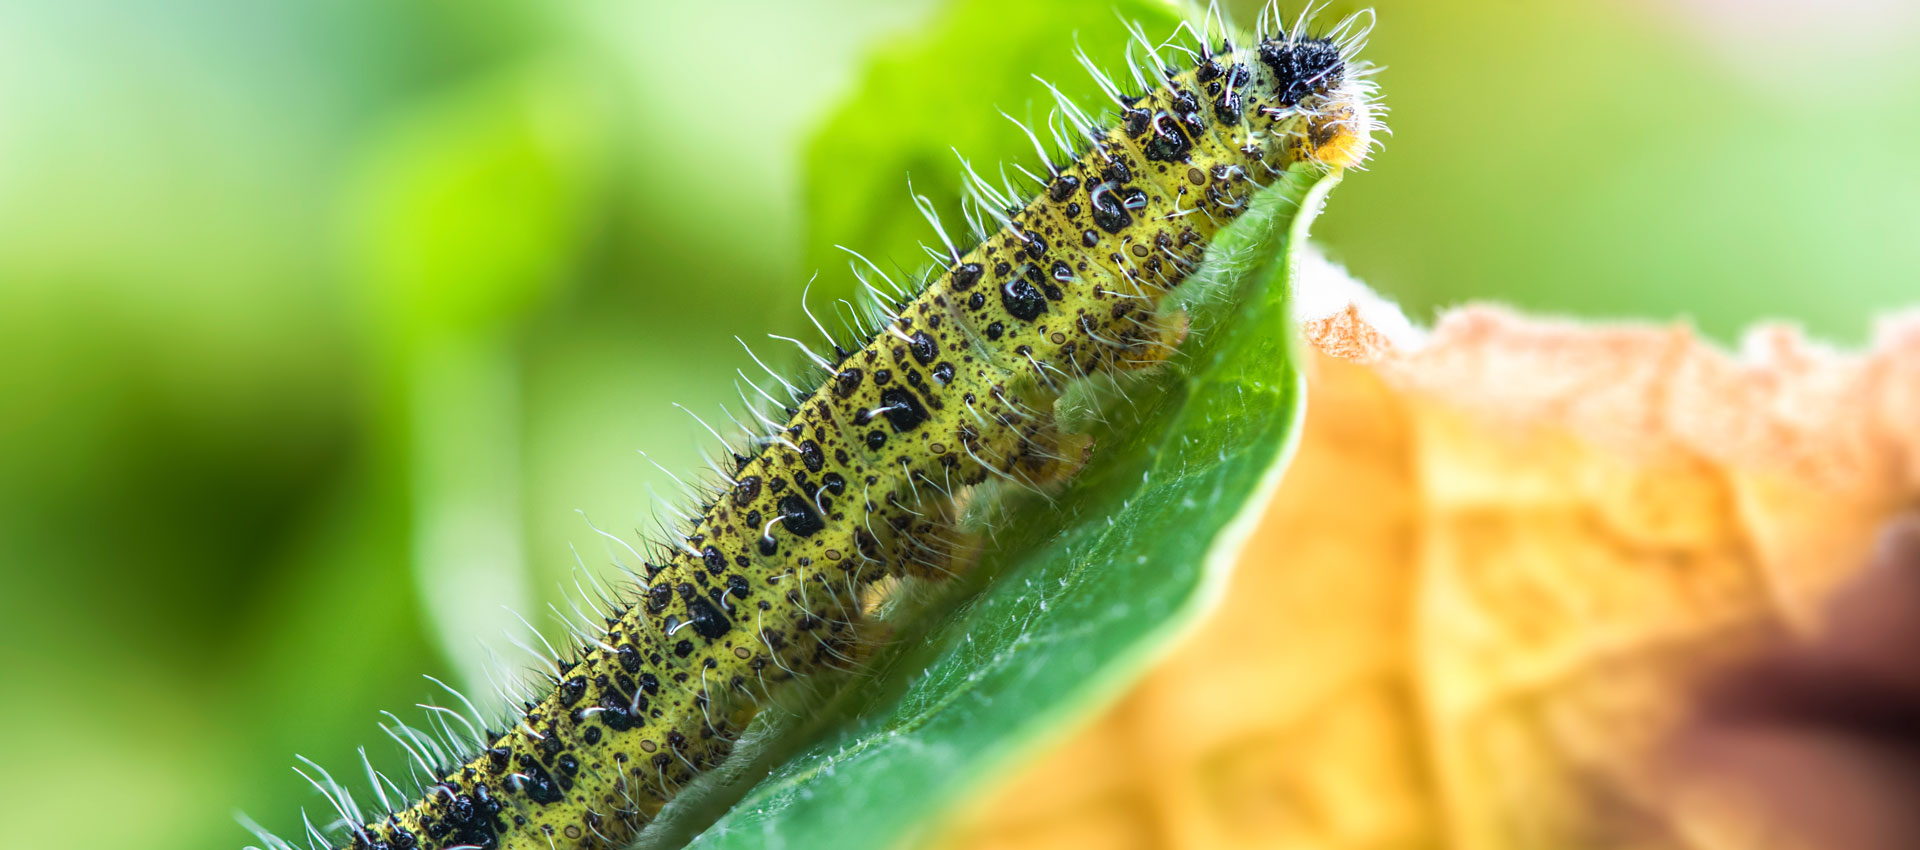 caterpillar on plant